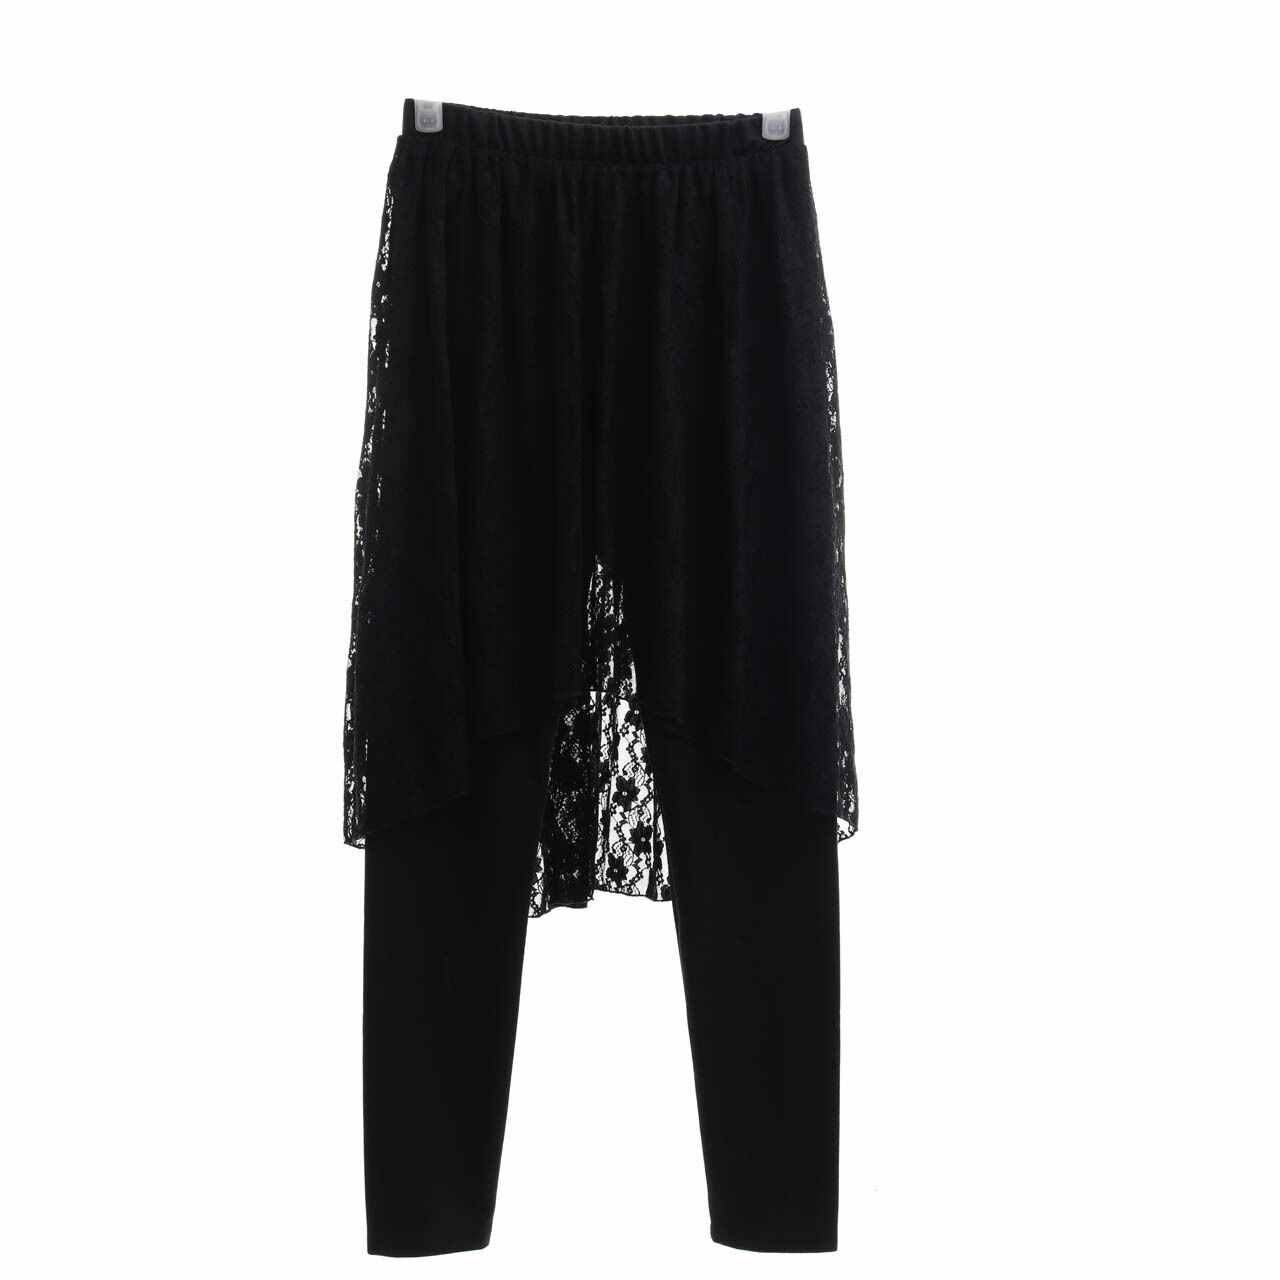 UNIQLO Black Lace Skort Long Pants